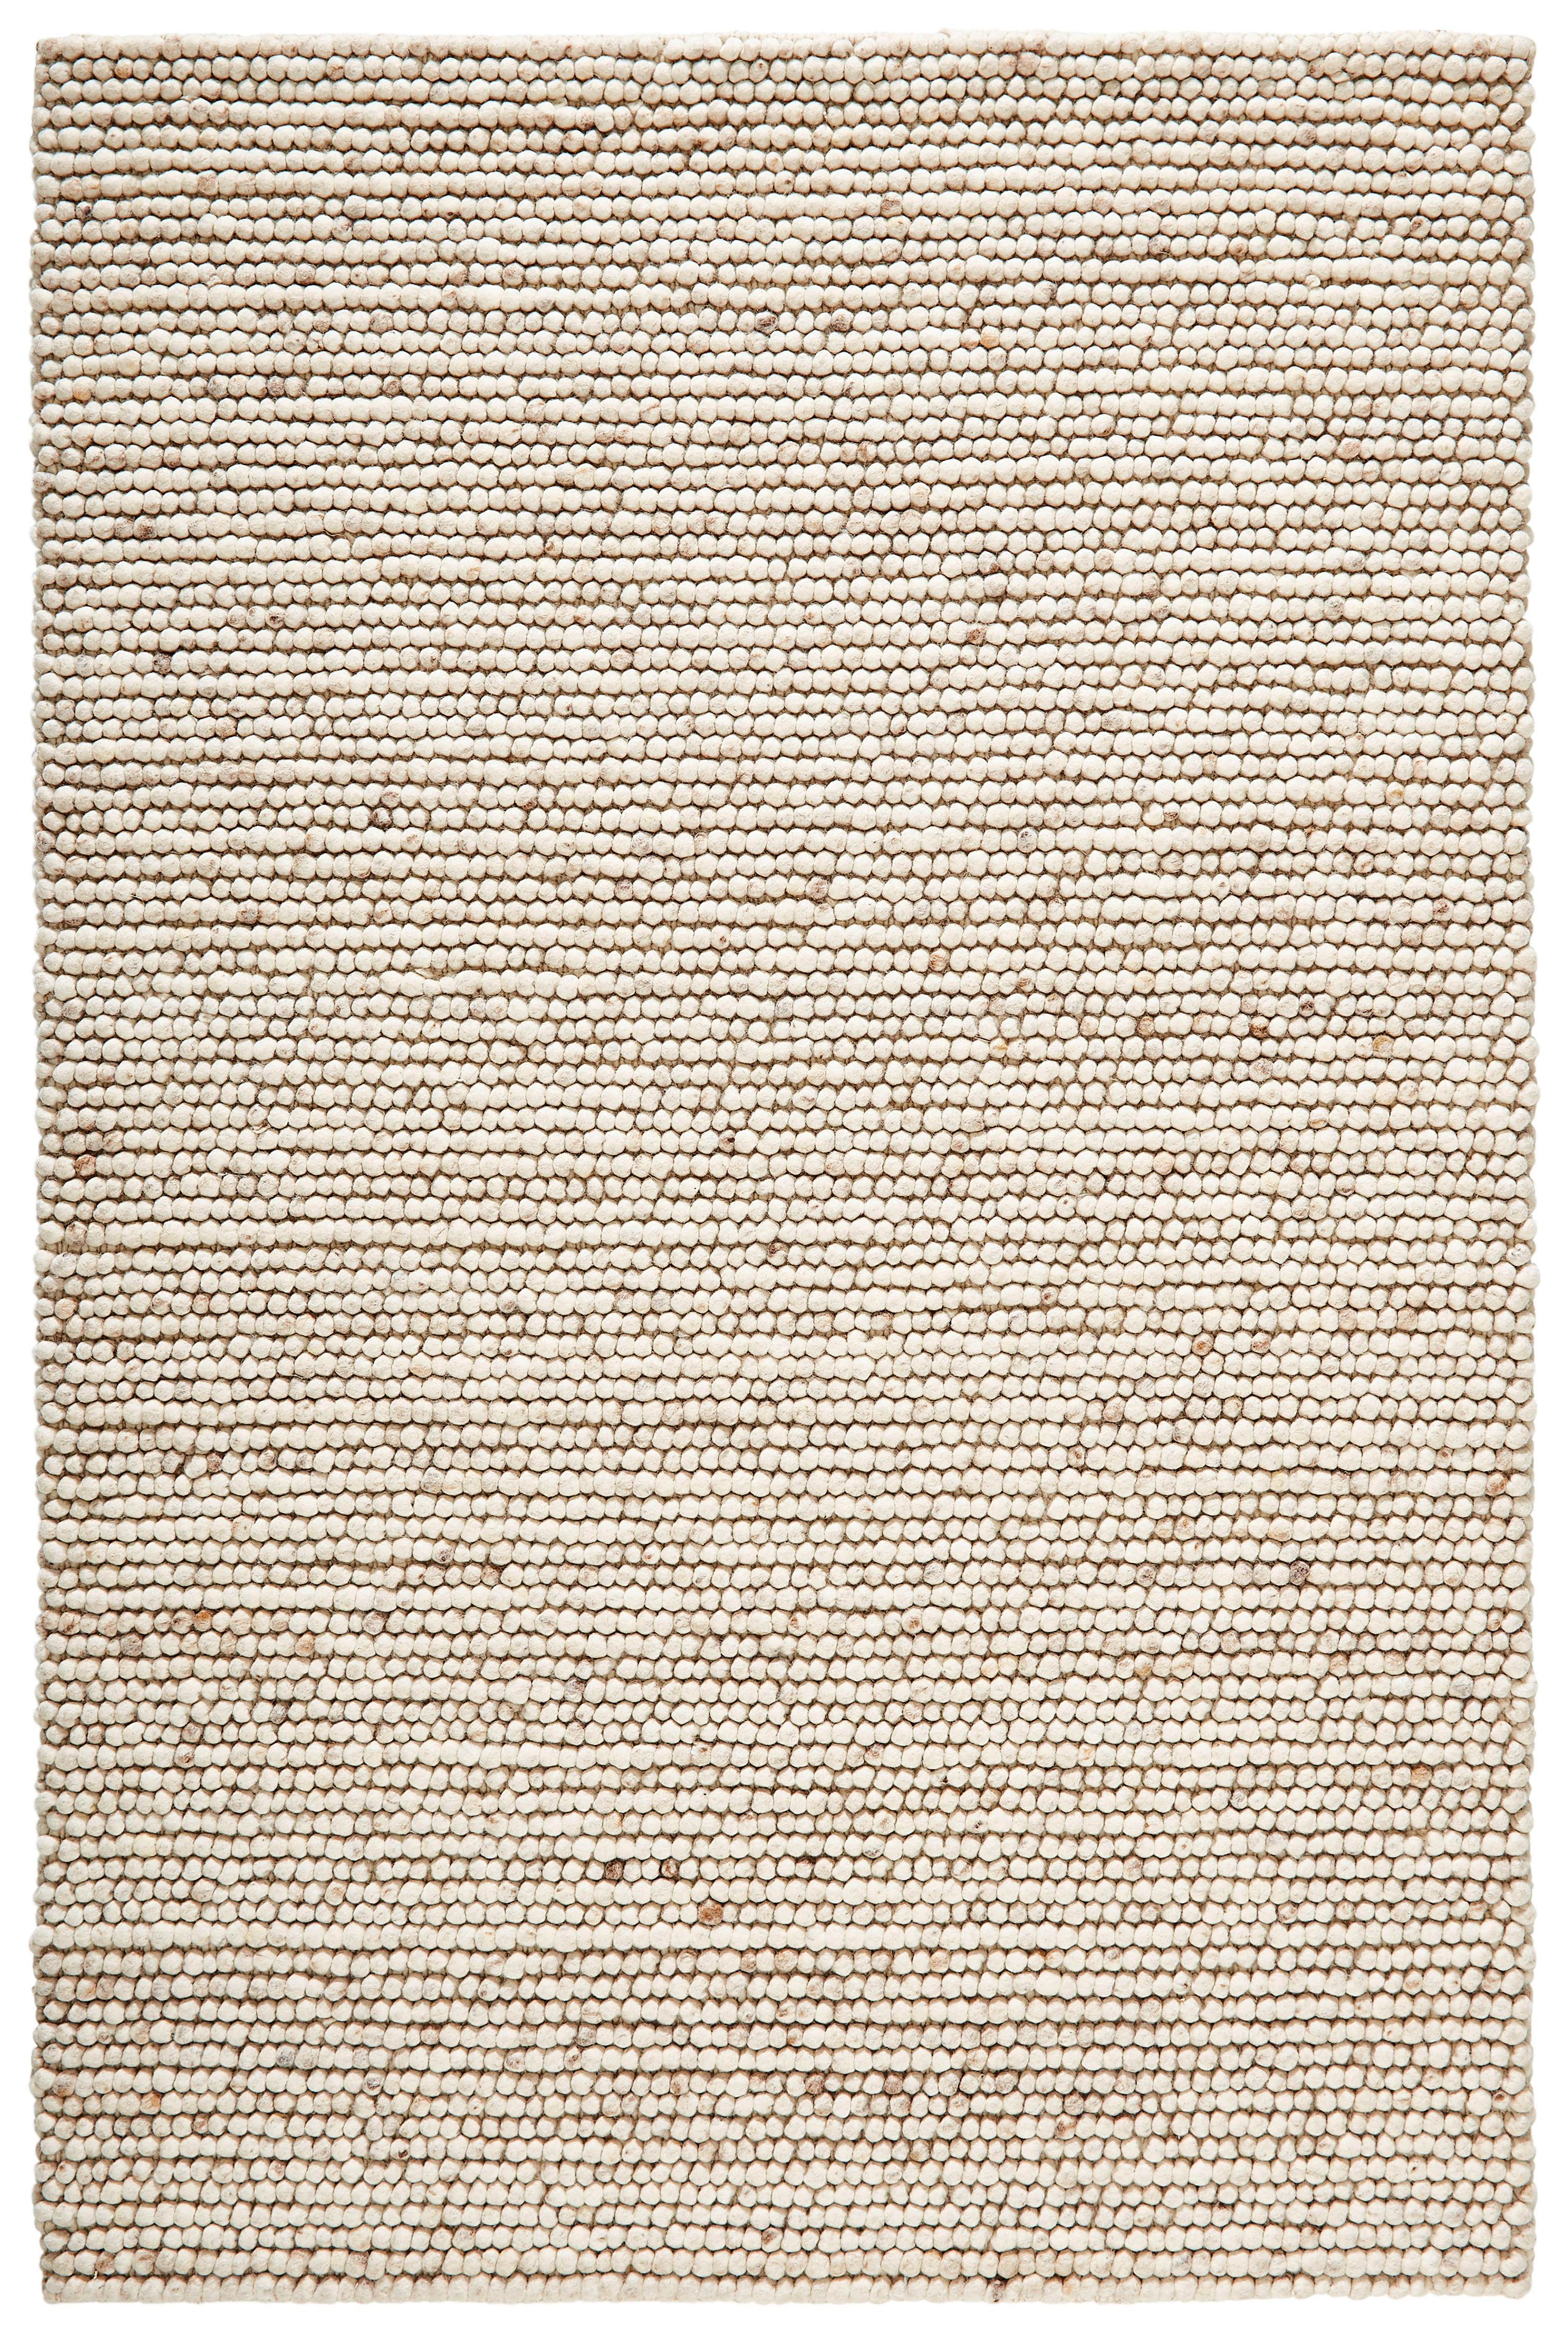 HANDWEBTEPPICH 130/200 cm Centa Dallas  - Creme, KONVENTIONELL, Textil (130/200cm) - Linea Natura